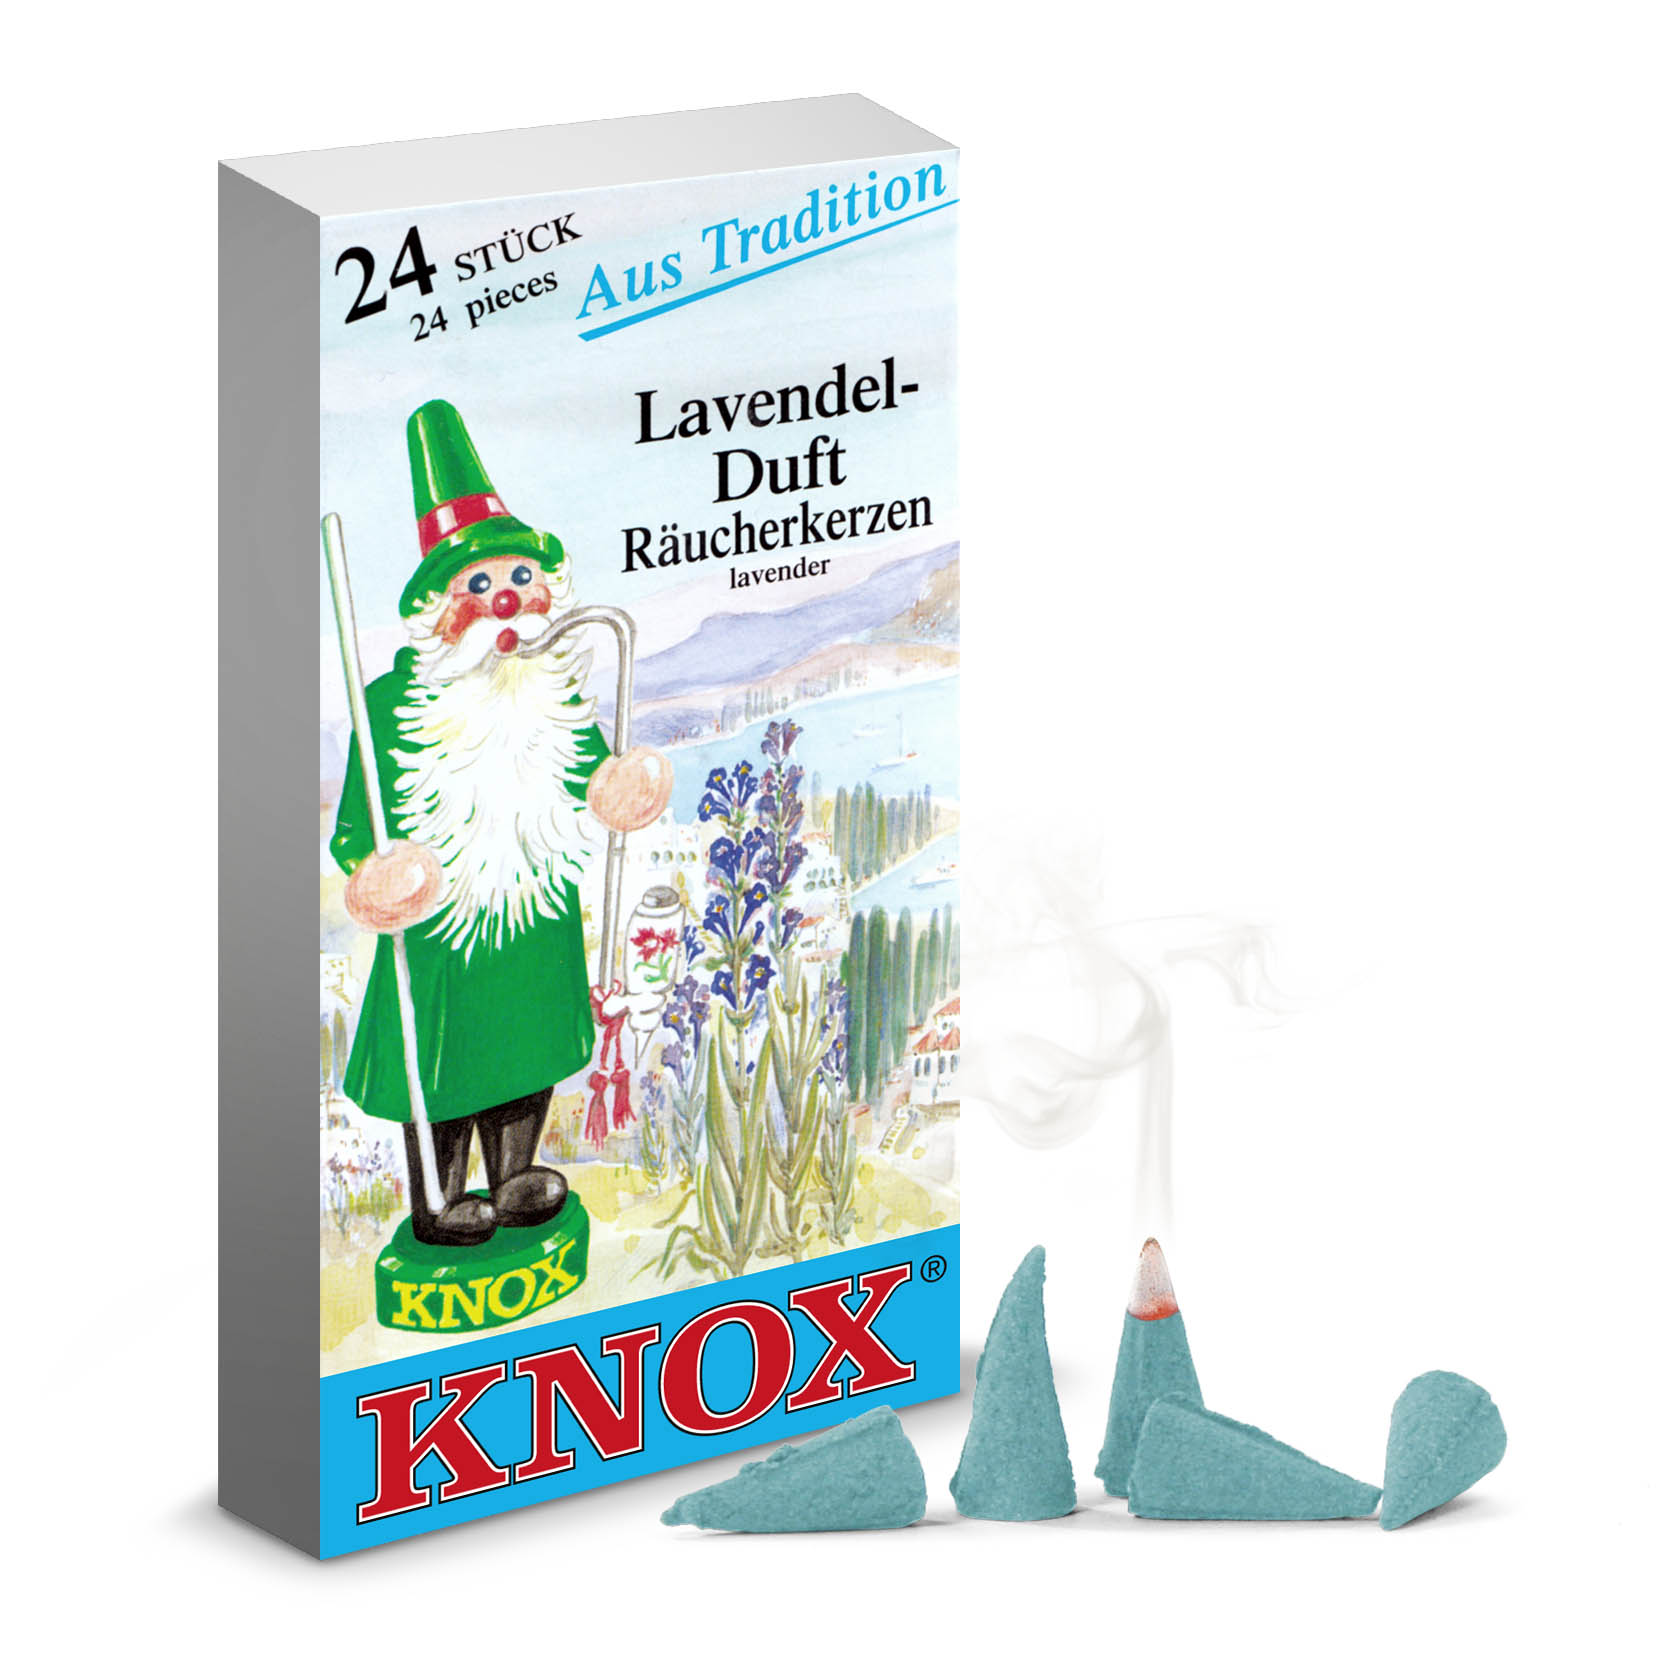 KNOX Räucherkerzen Lavendel (24)